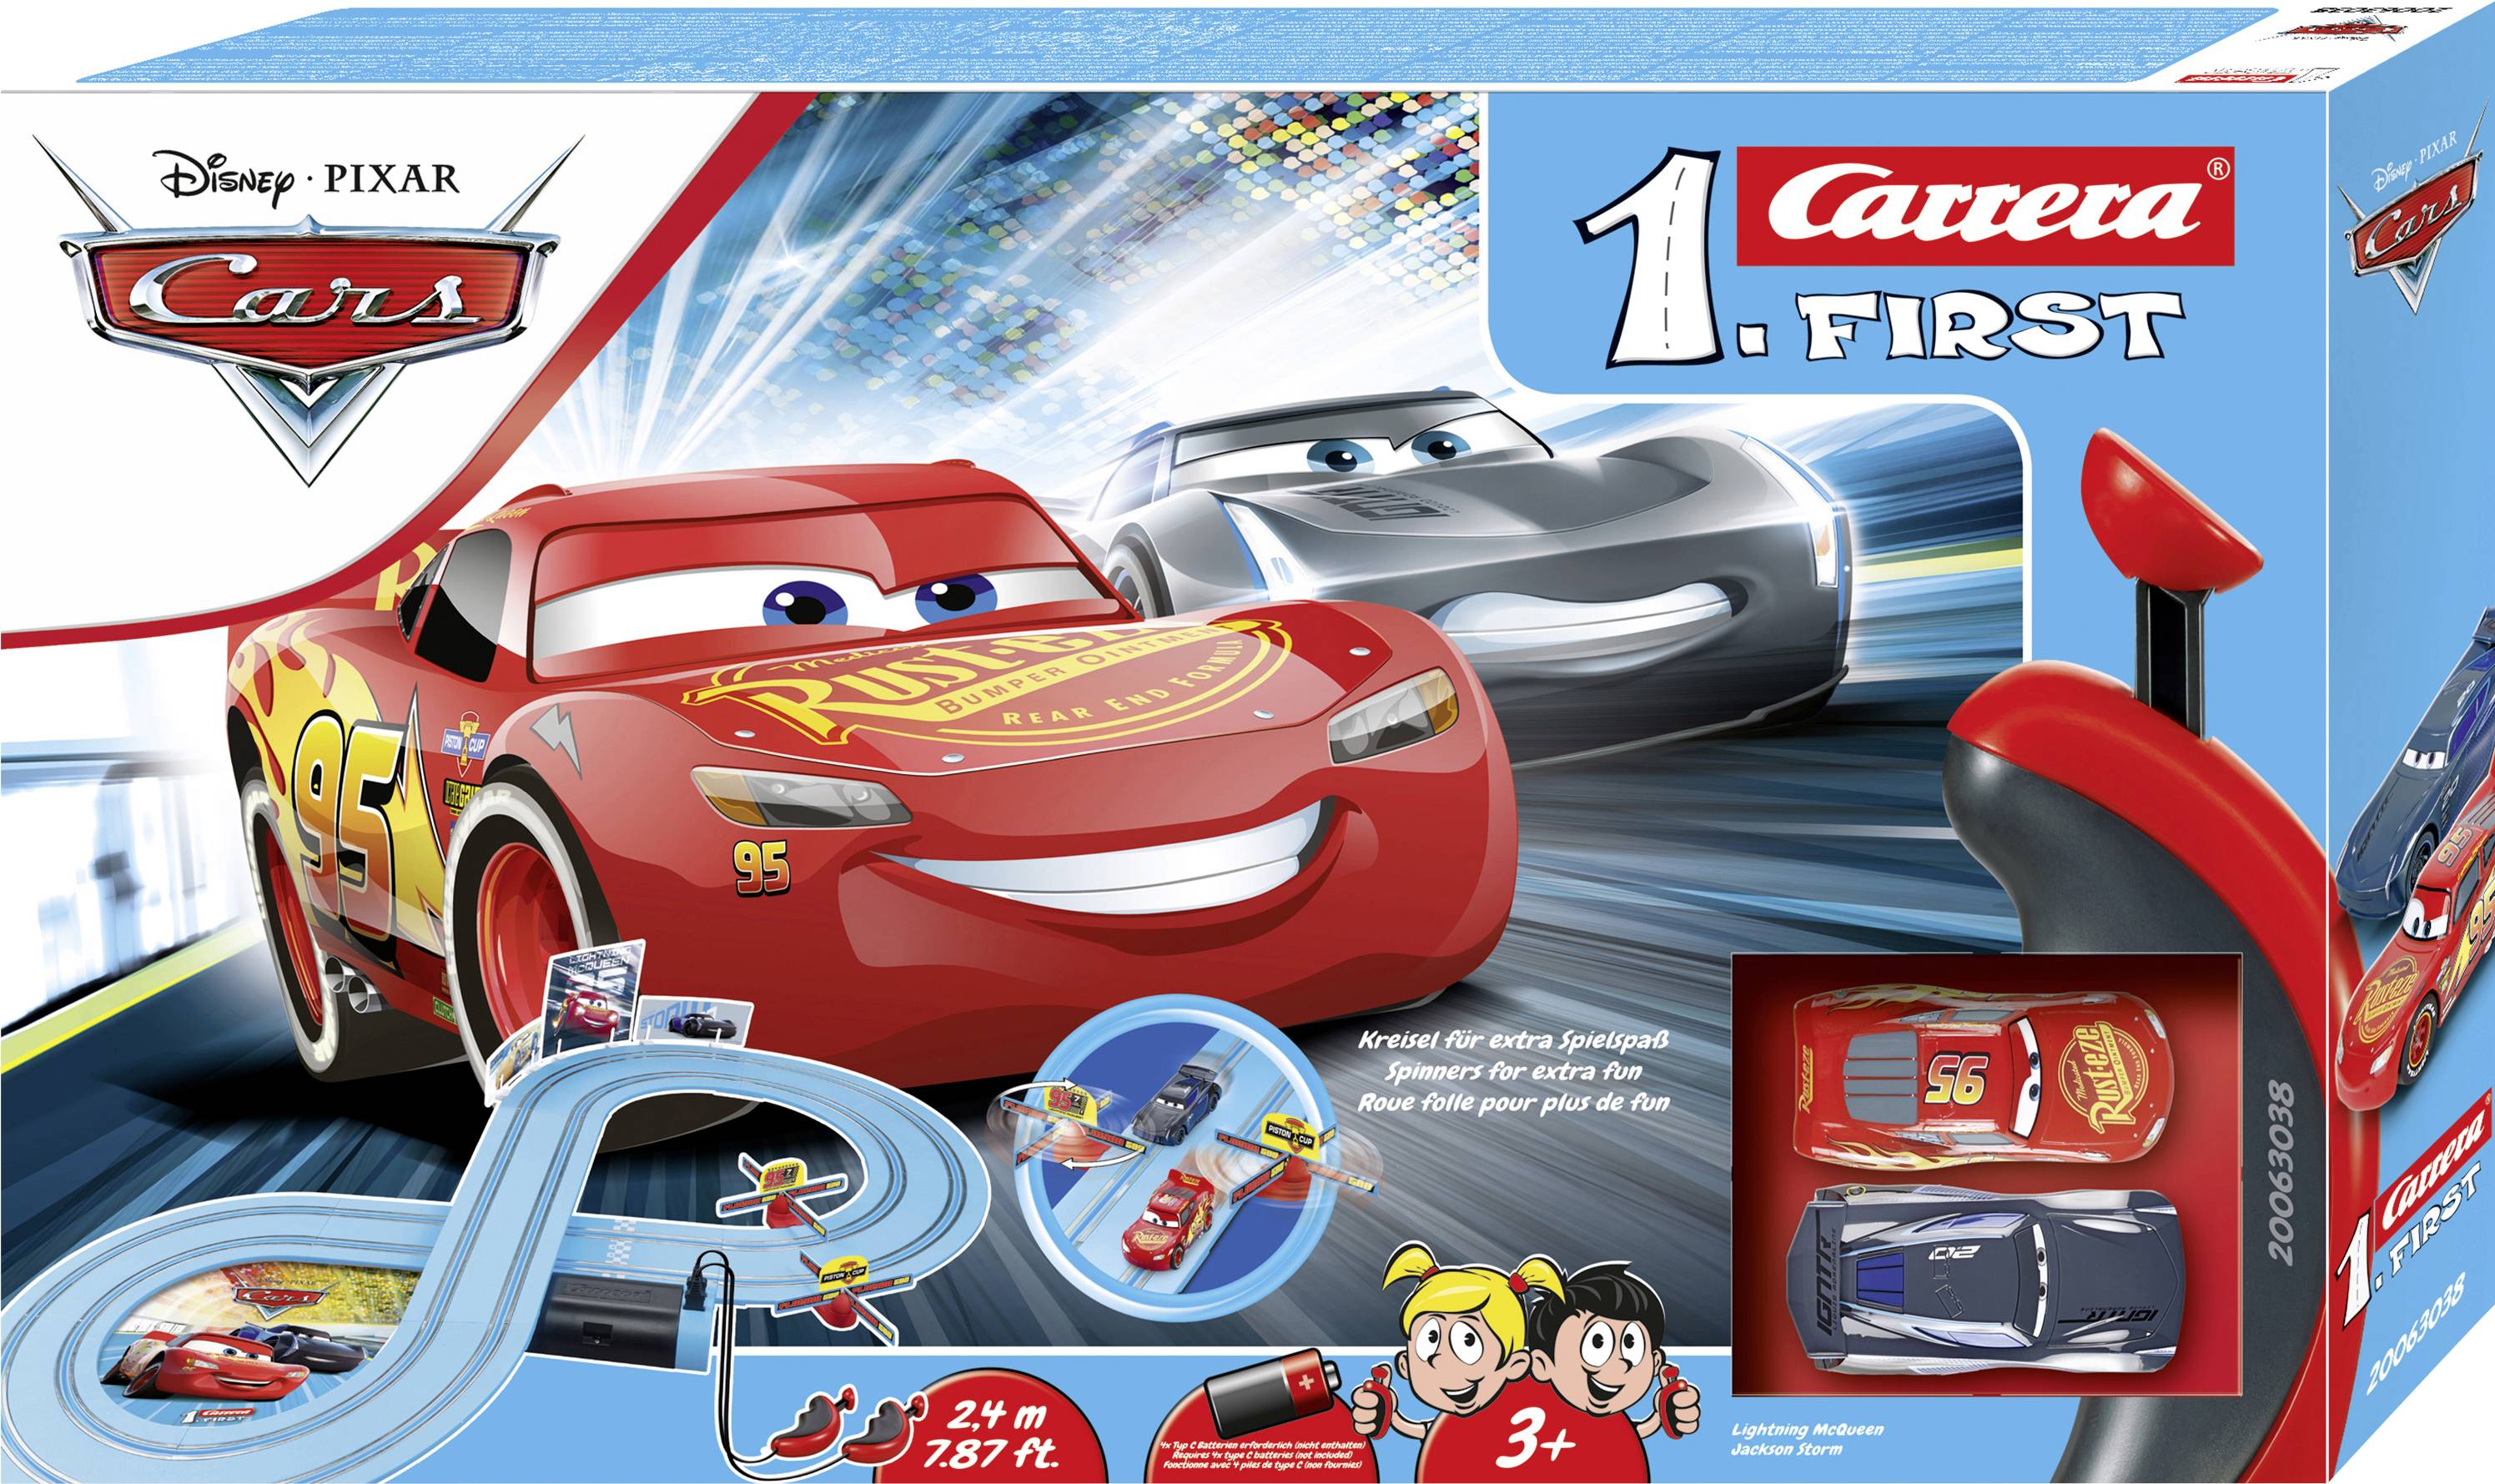 Carrera 20063038 First Disney Pixar Cars - power duel Starter kit |  